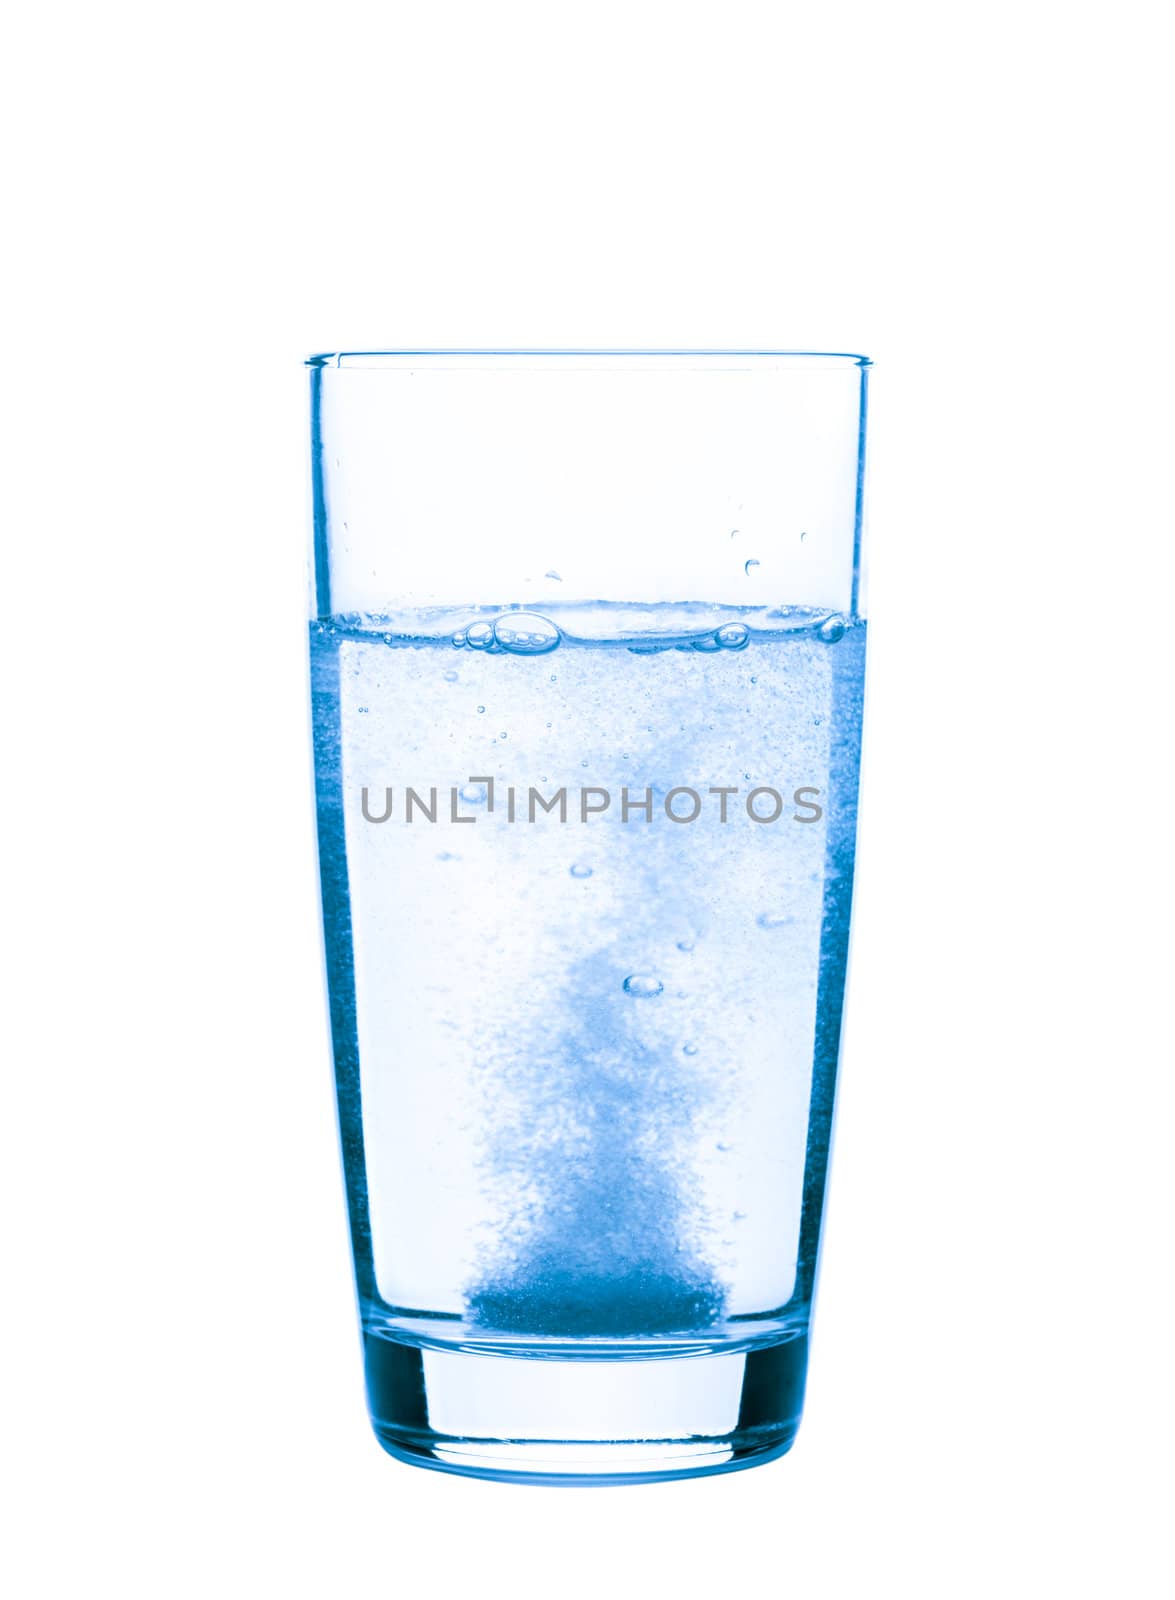 Aspirin in a glass by oksix